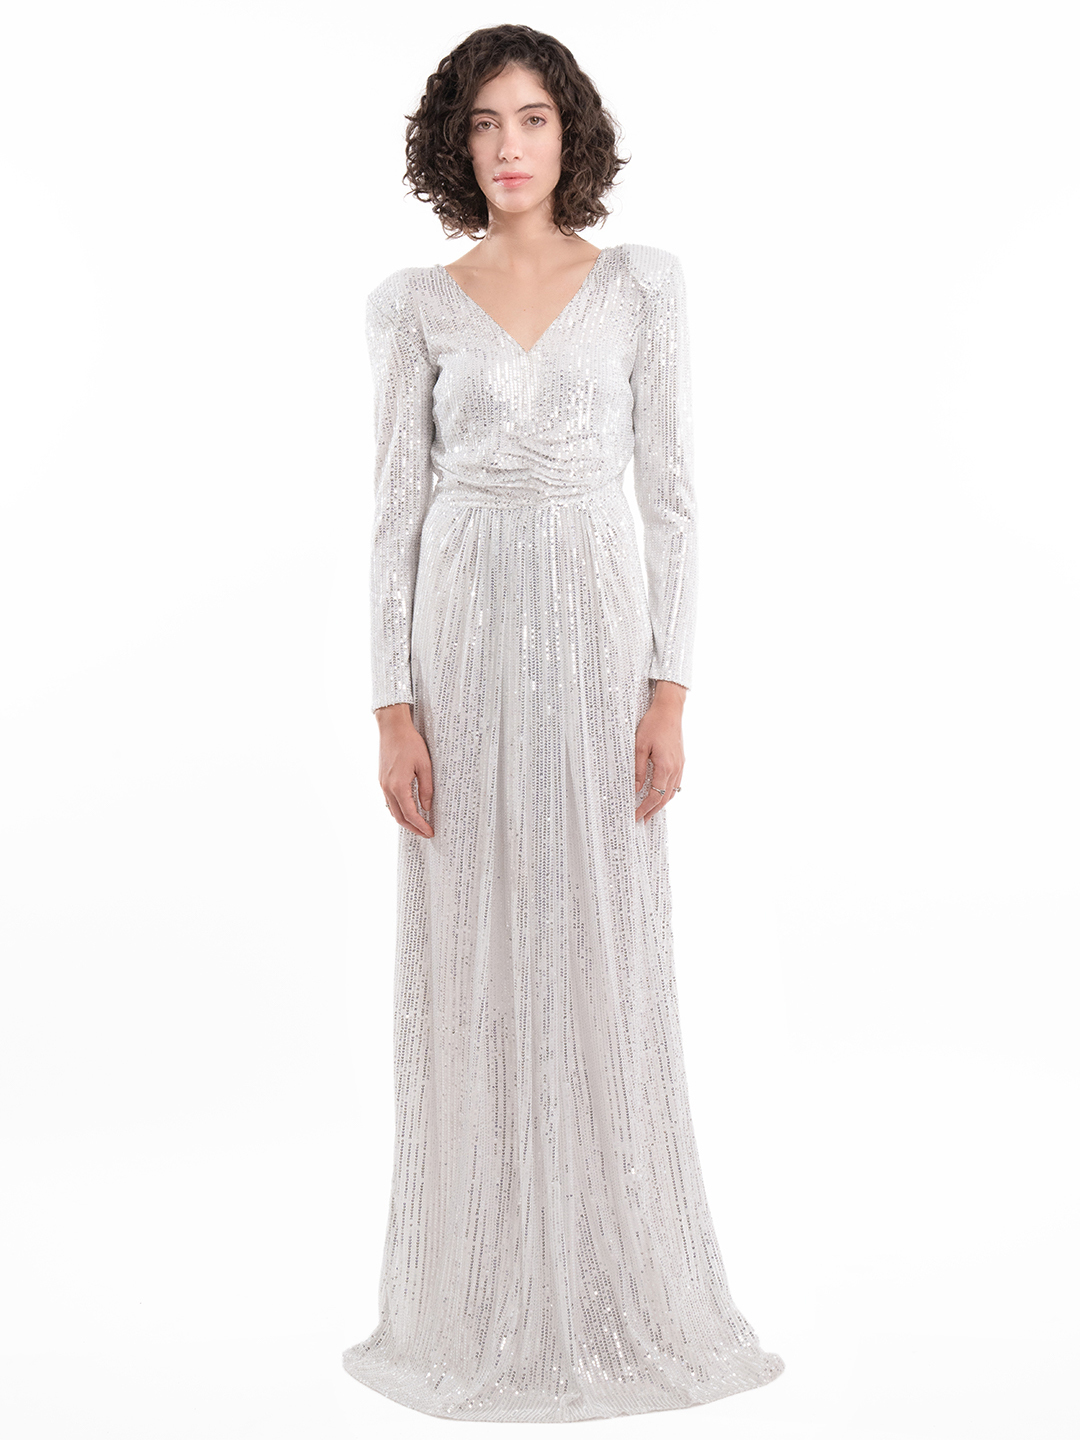 Dazzle In Divine White Dress - Front